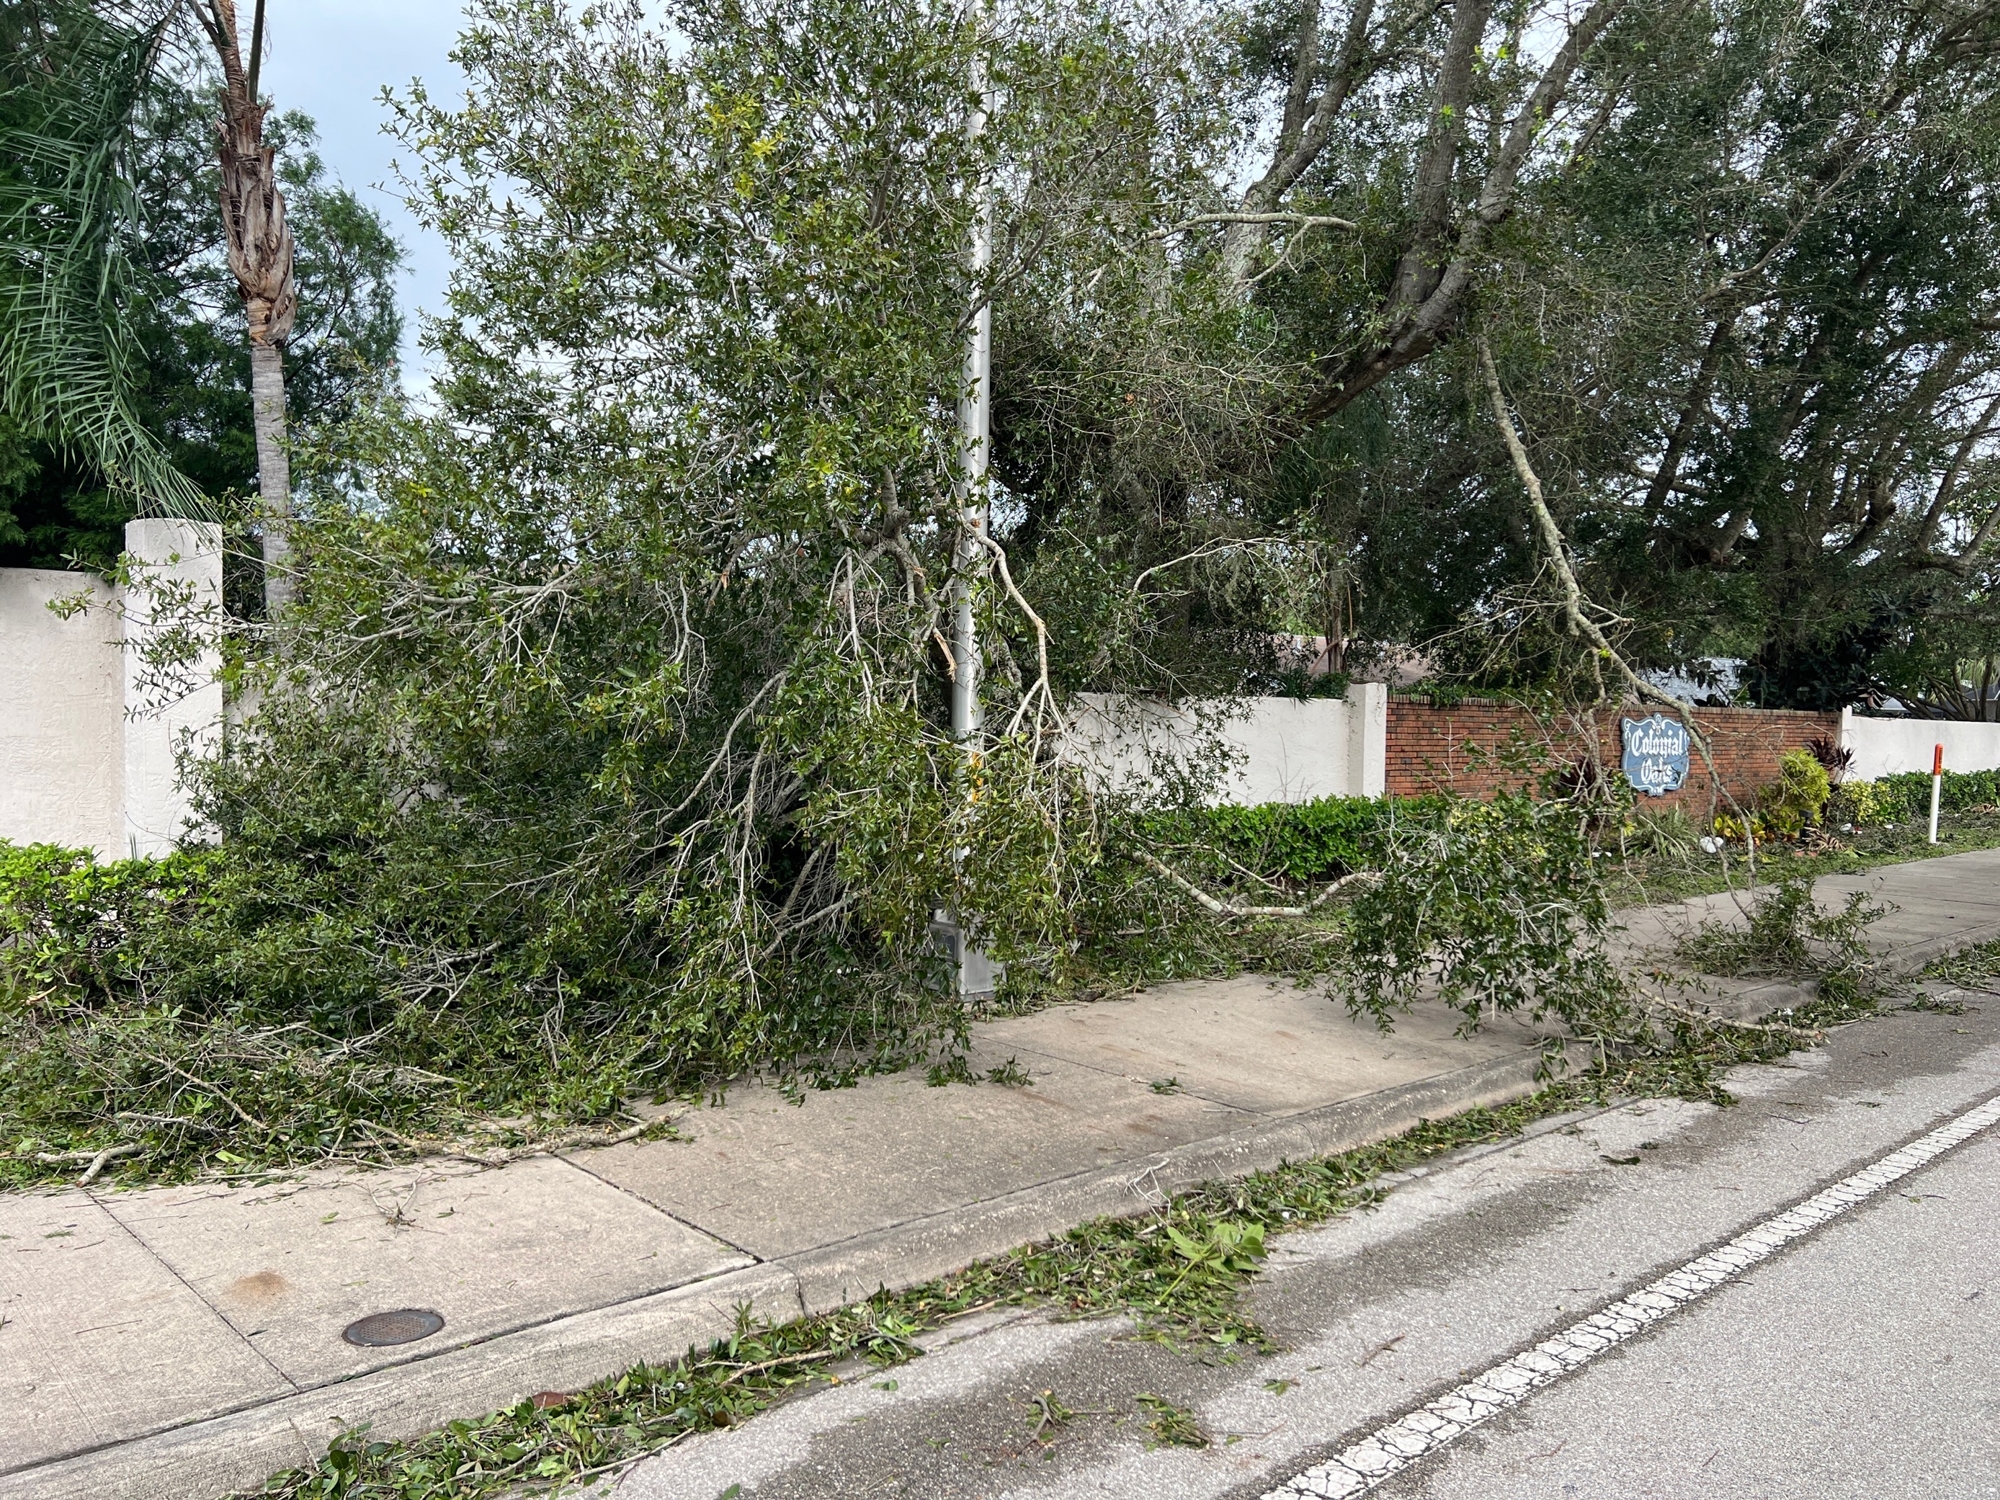 Damage is seen late Thursday morning outside the Colonial Oaks neighborhood. (Photo courtesy of Access Sarasota)